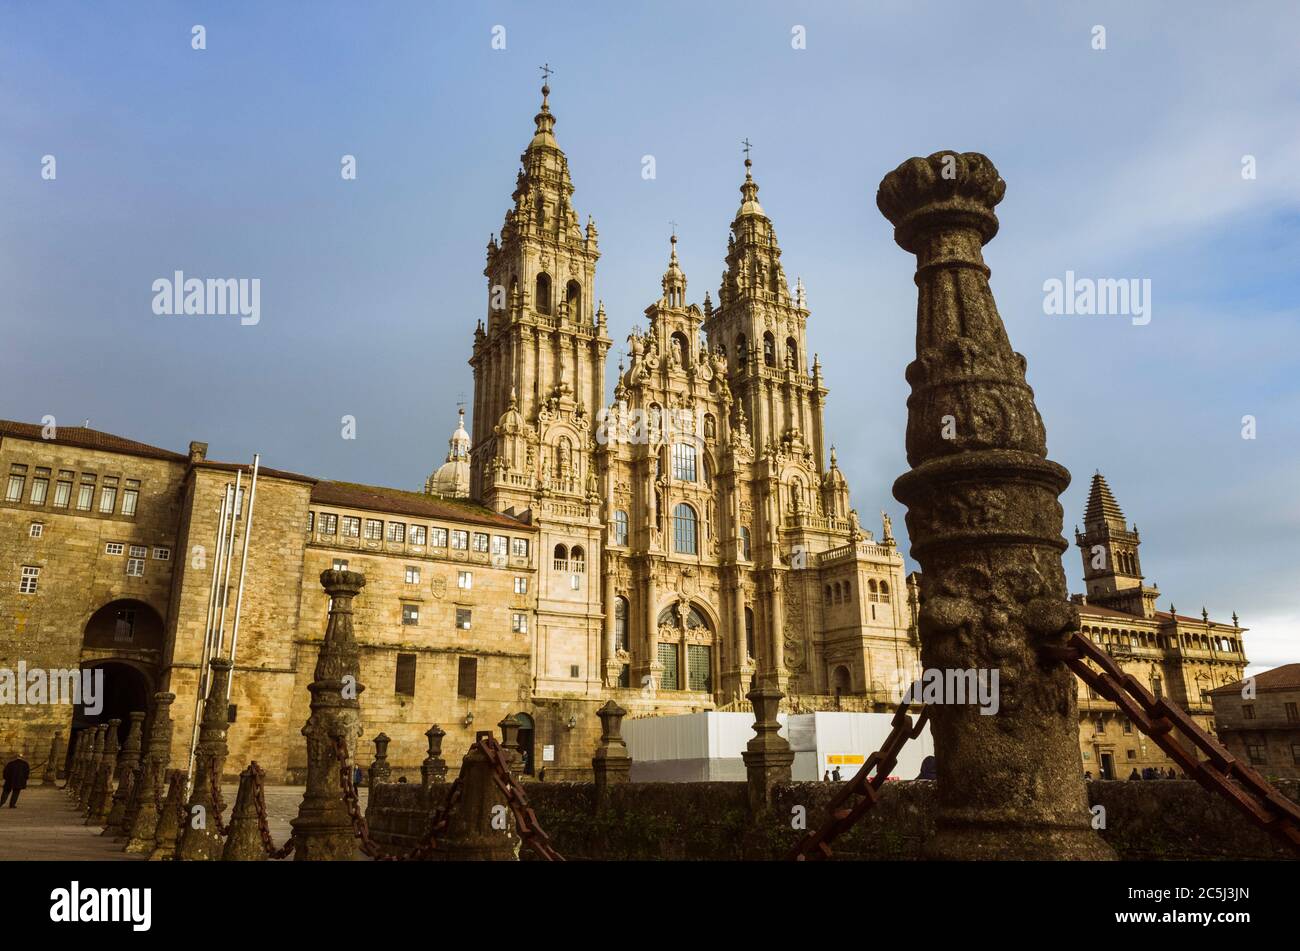 Santiago de Compostela, A Coruña province, Galicia, Spain - February 12th, 2020 : Baroque facade of the cathedral in the Obradoiro square. The Cathedr Stock Photo